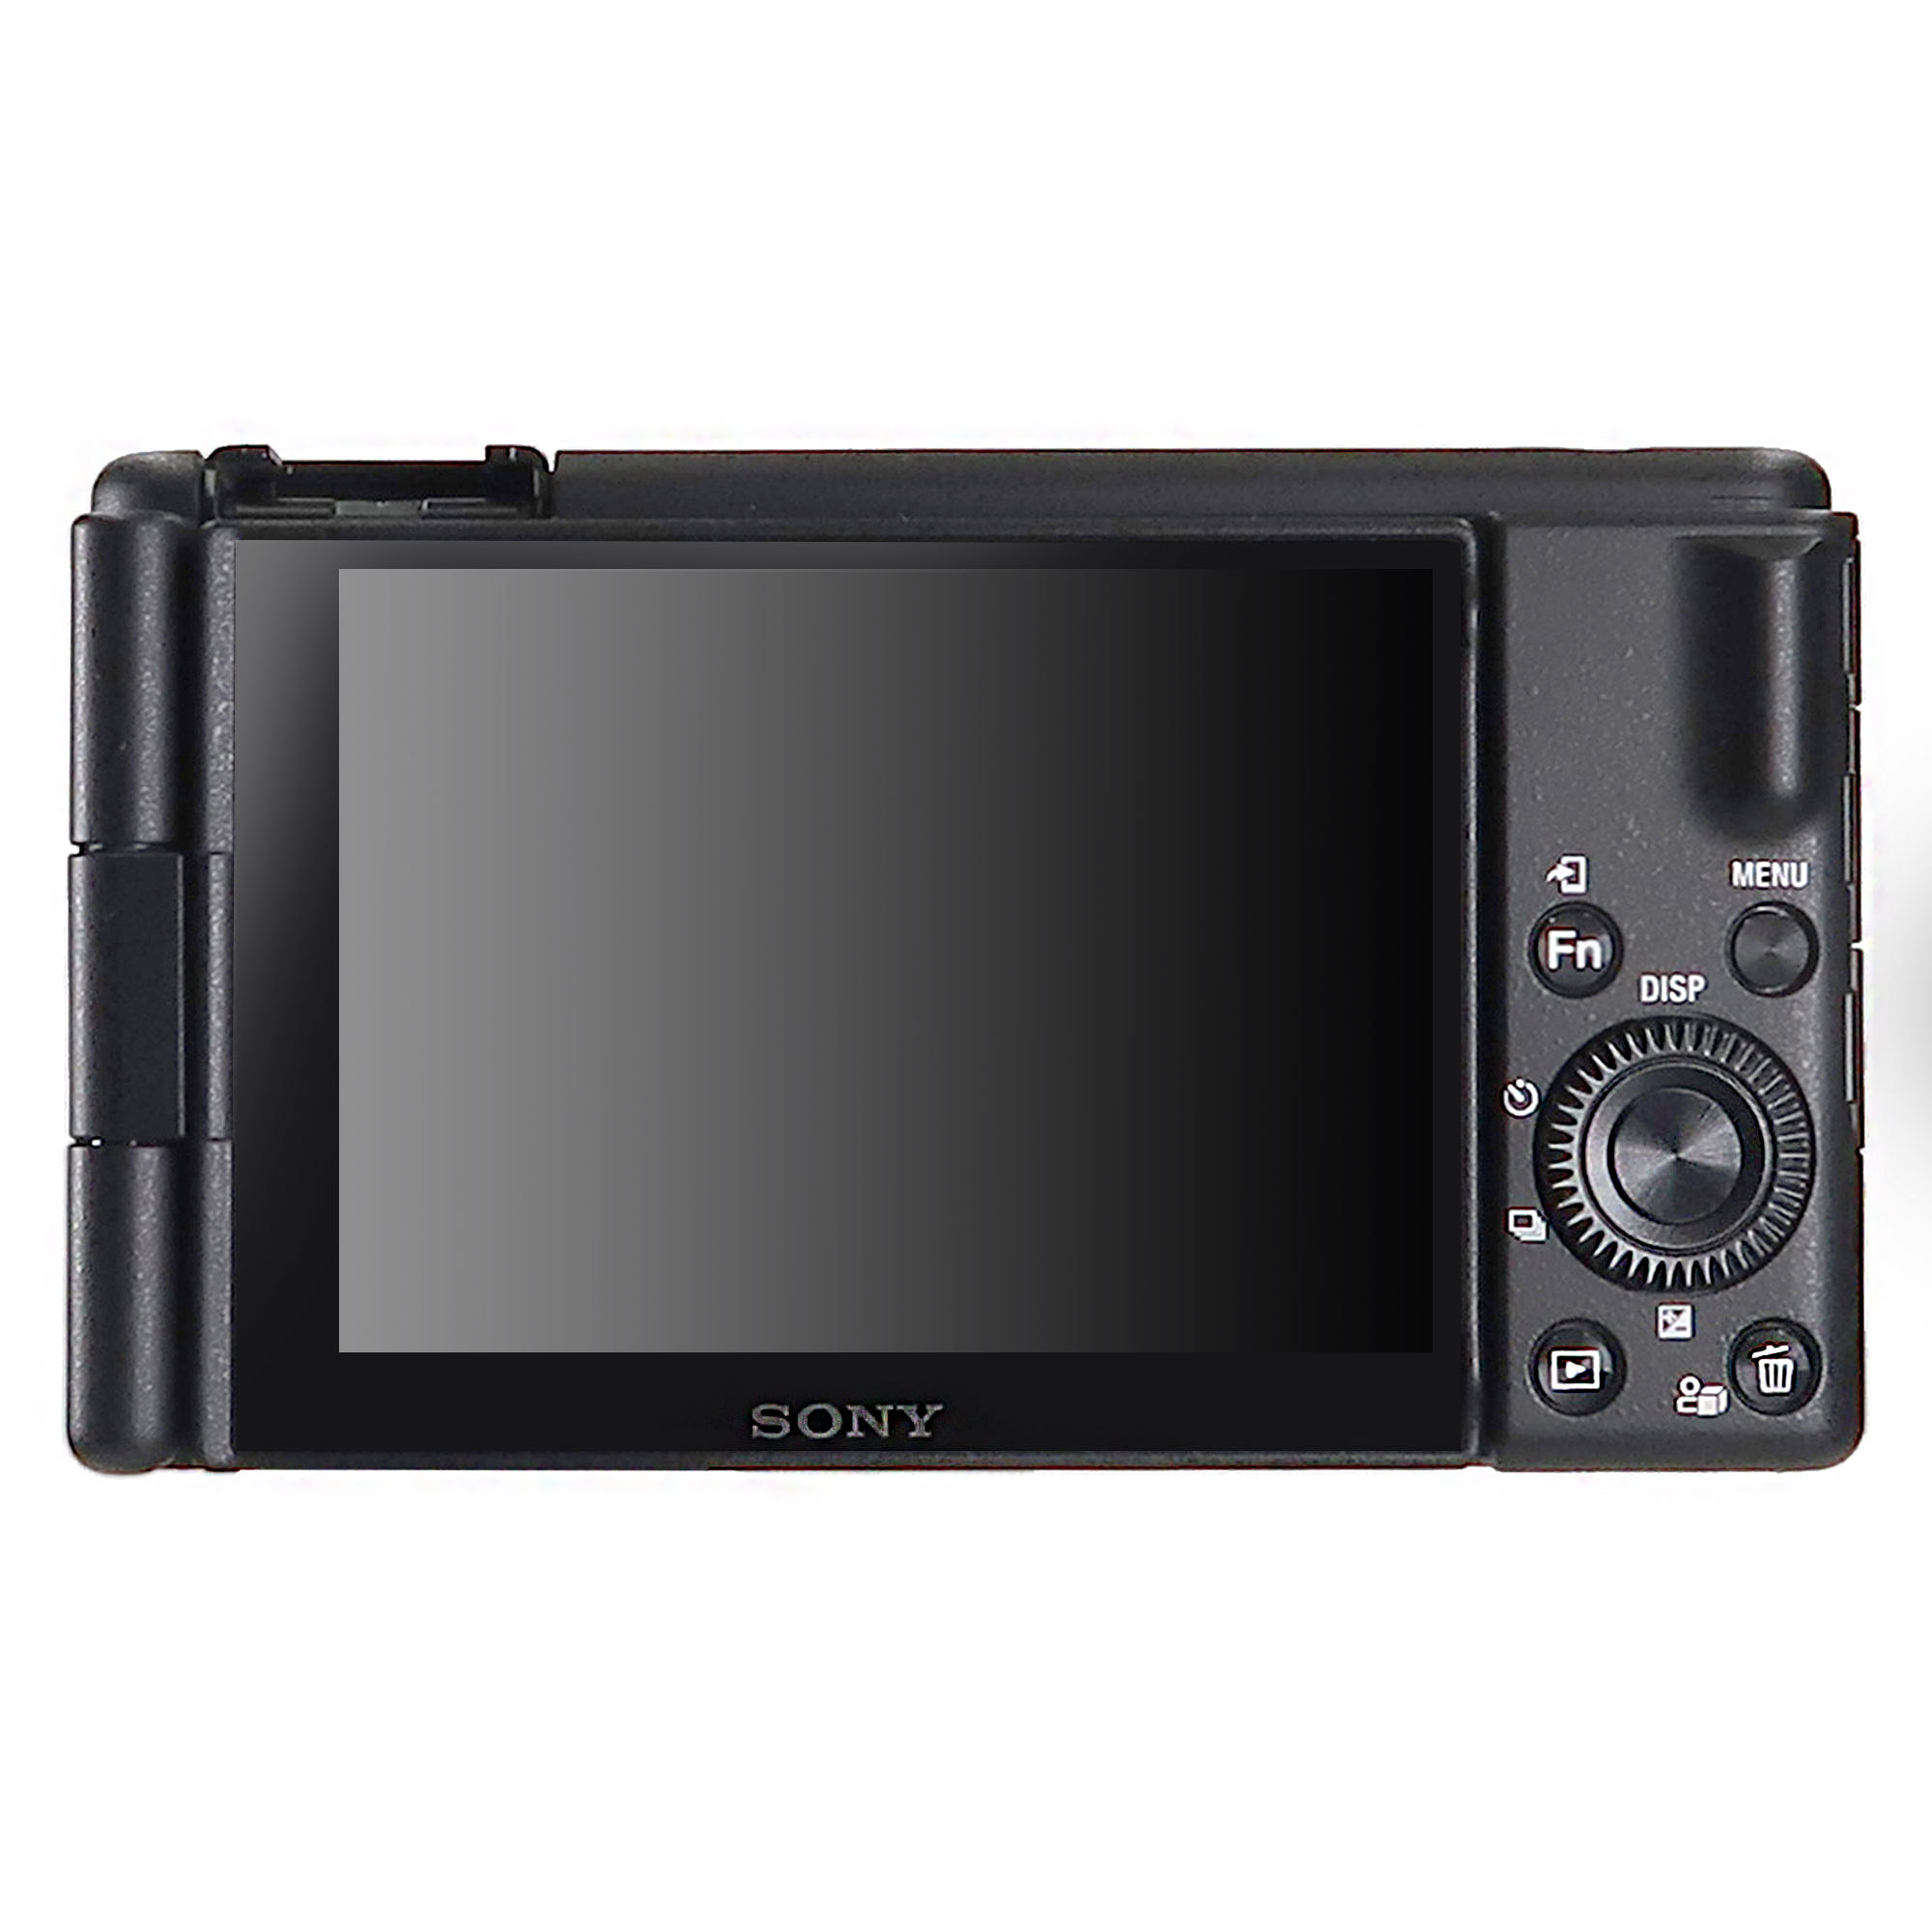 Sony ZV-1 II Digital Camera for Vloggers (Black)